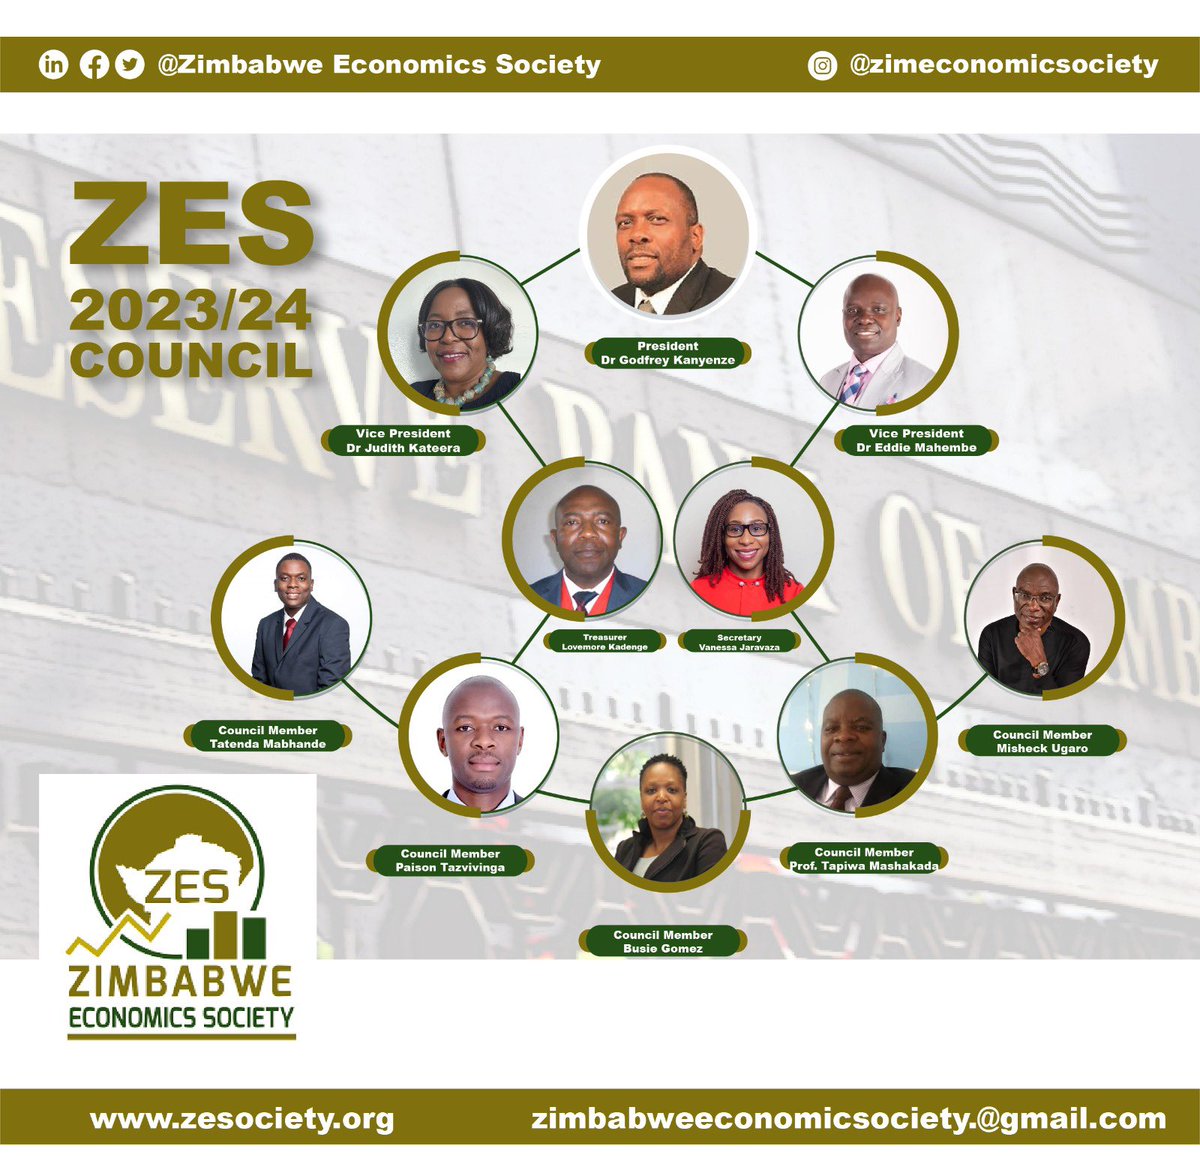 New chapter: 

1. Vice President of the Zimbabwe Economics Society (ZES), and 
2. Editor in Chief of the Zimbabwe Journal of Economics (ZJE)

#SoHelpMeGod
#Education4Development 
#InclusiveGrowth 
#InclusiveDevelopment